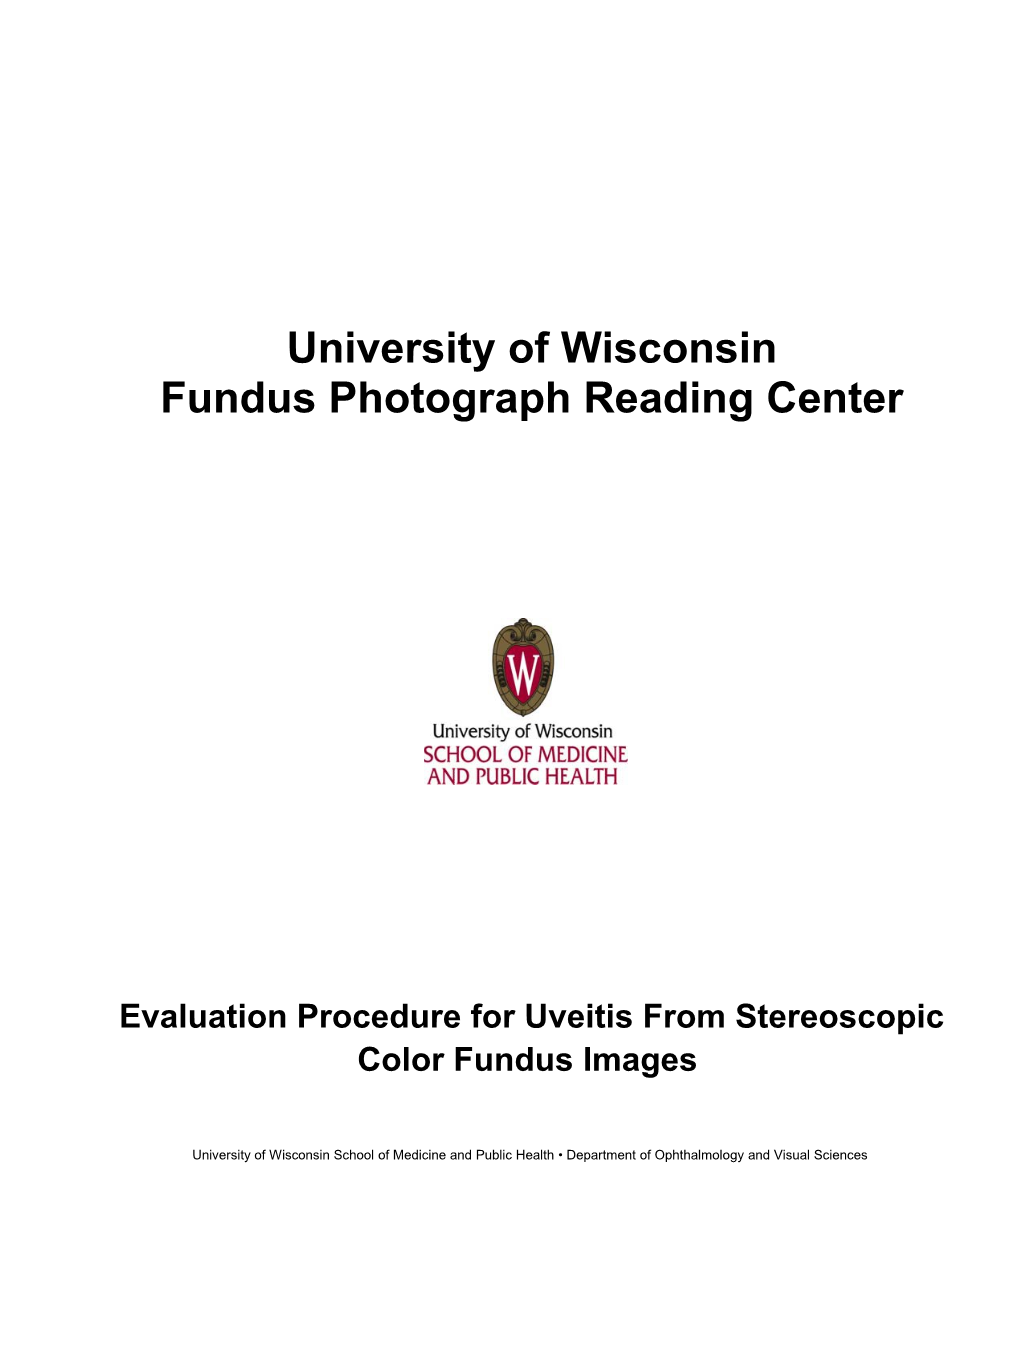 University of Wisconsin Fundus Photograph Reading Center